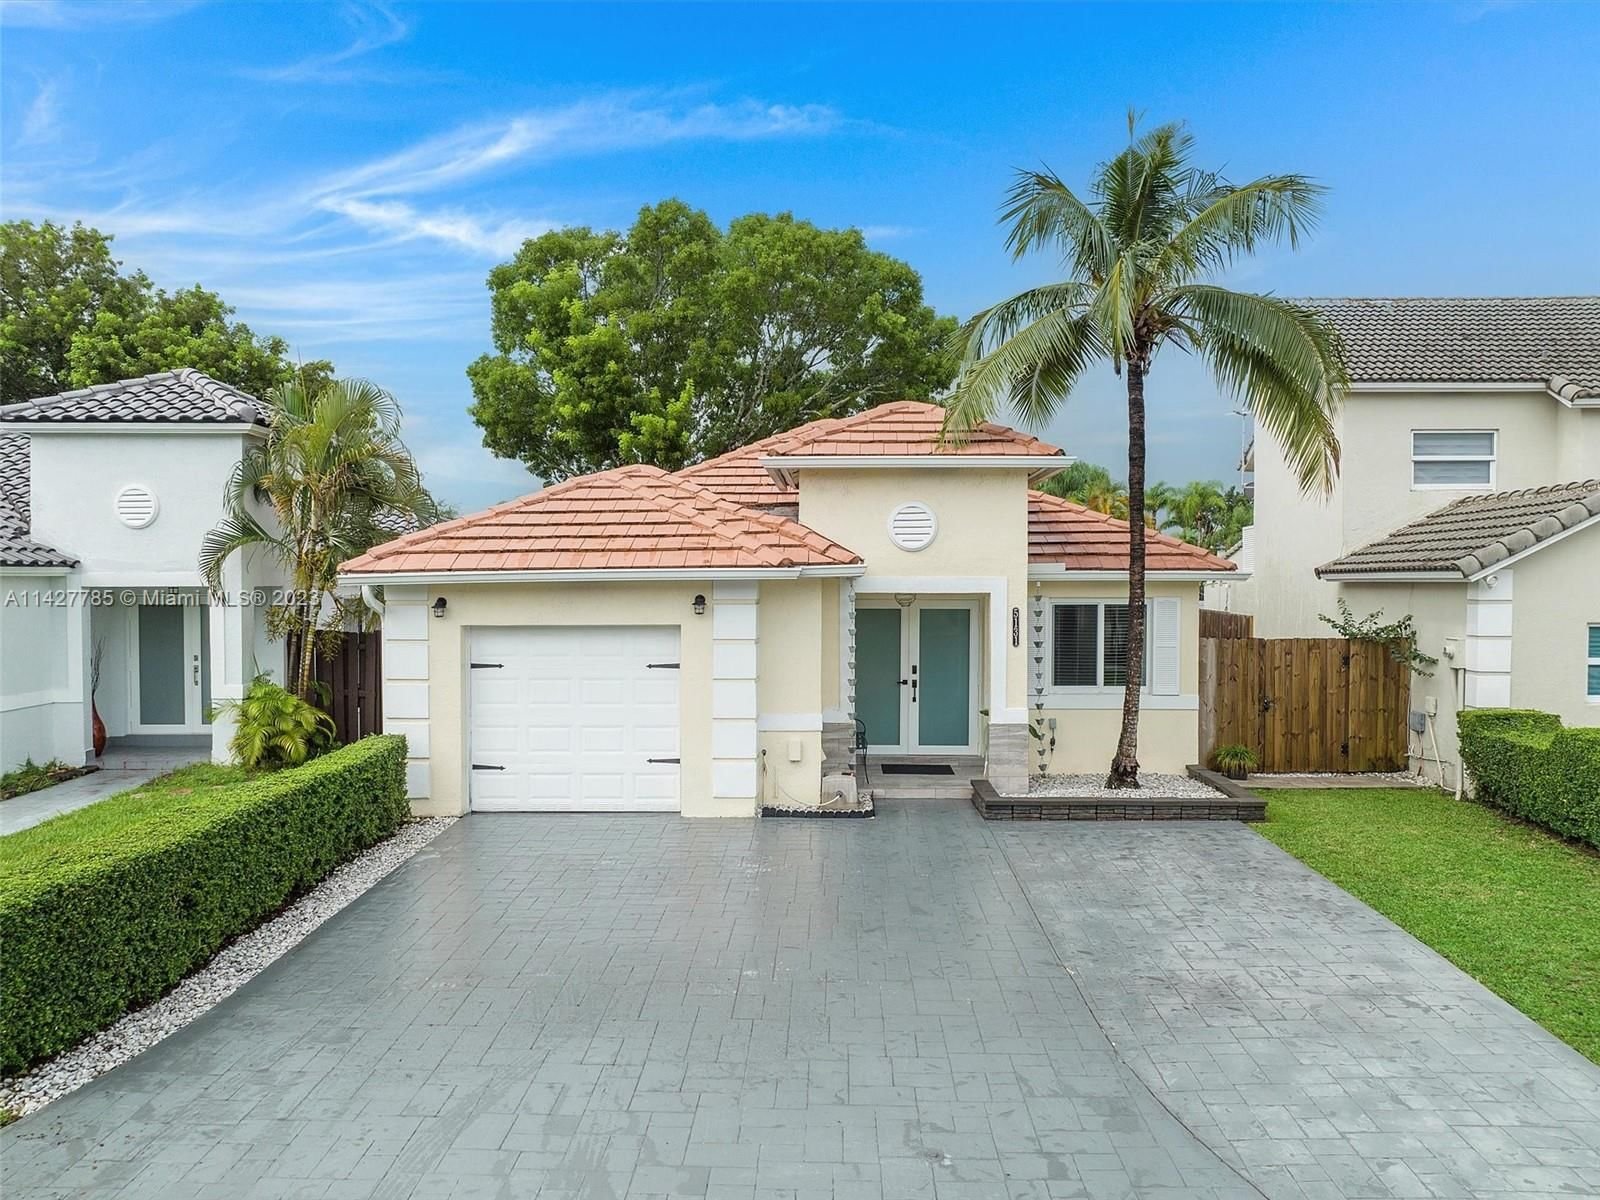 Real estate property located at 5131 154th Pl, Miami-Dade County, Miami, FL